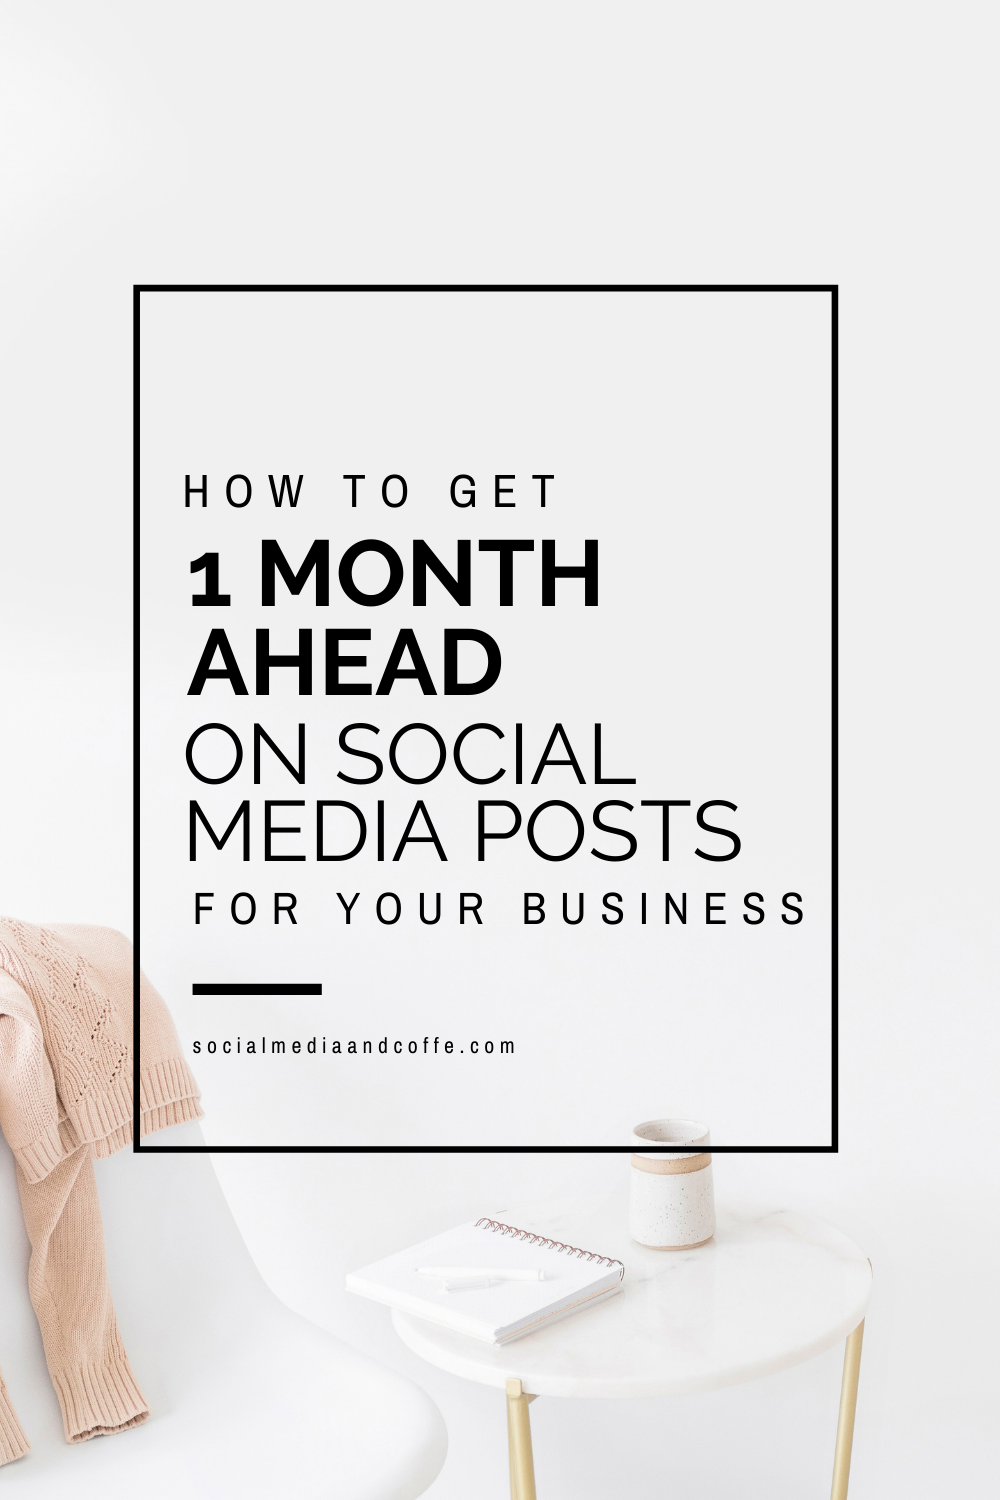 19 small business saturday marketing social media ideas